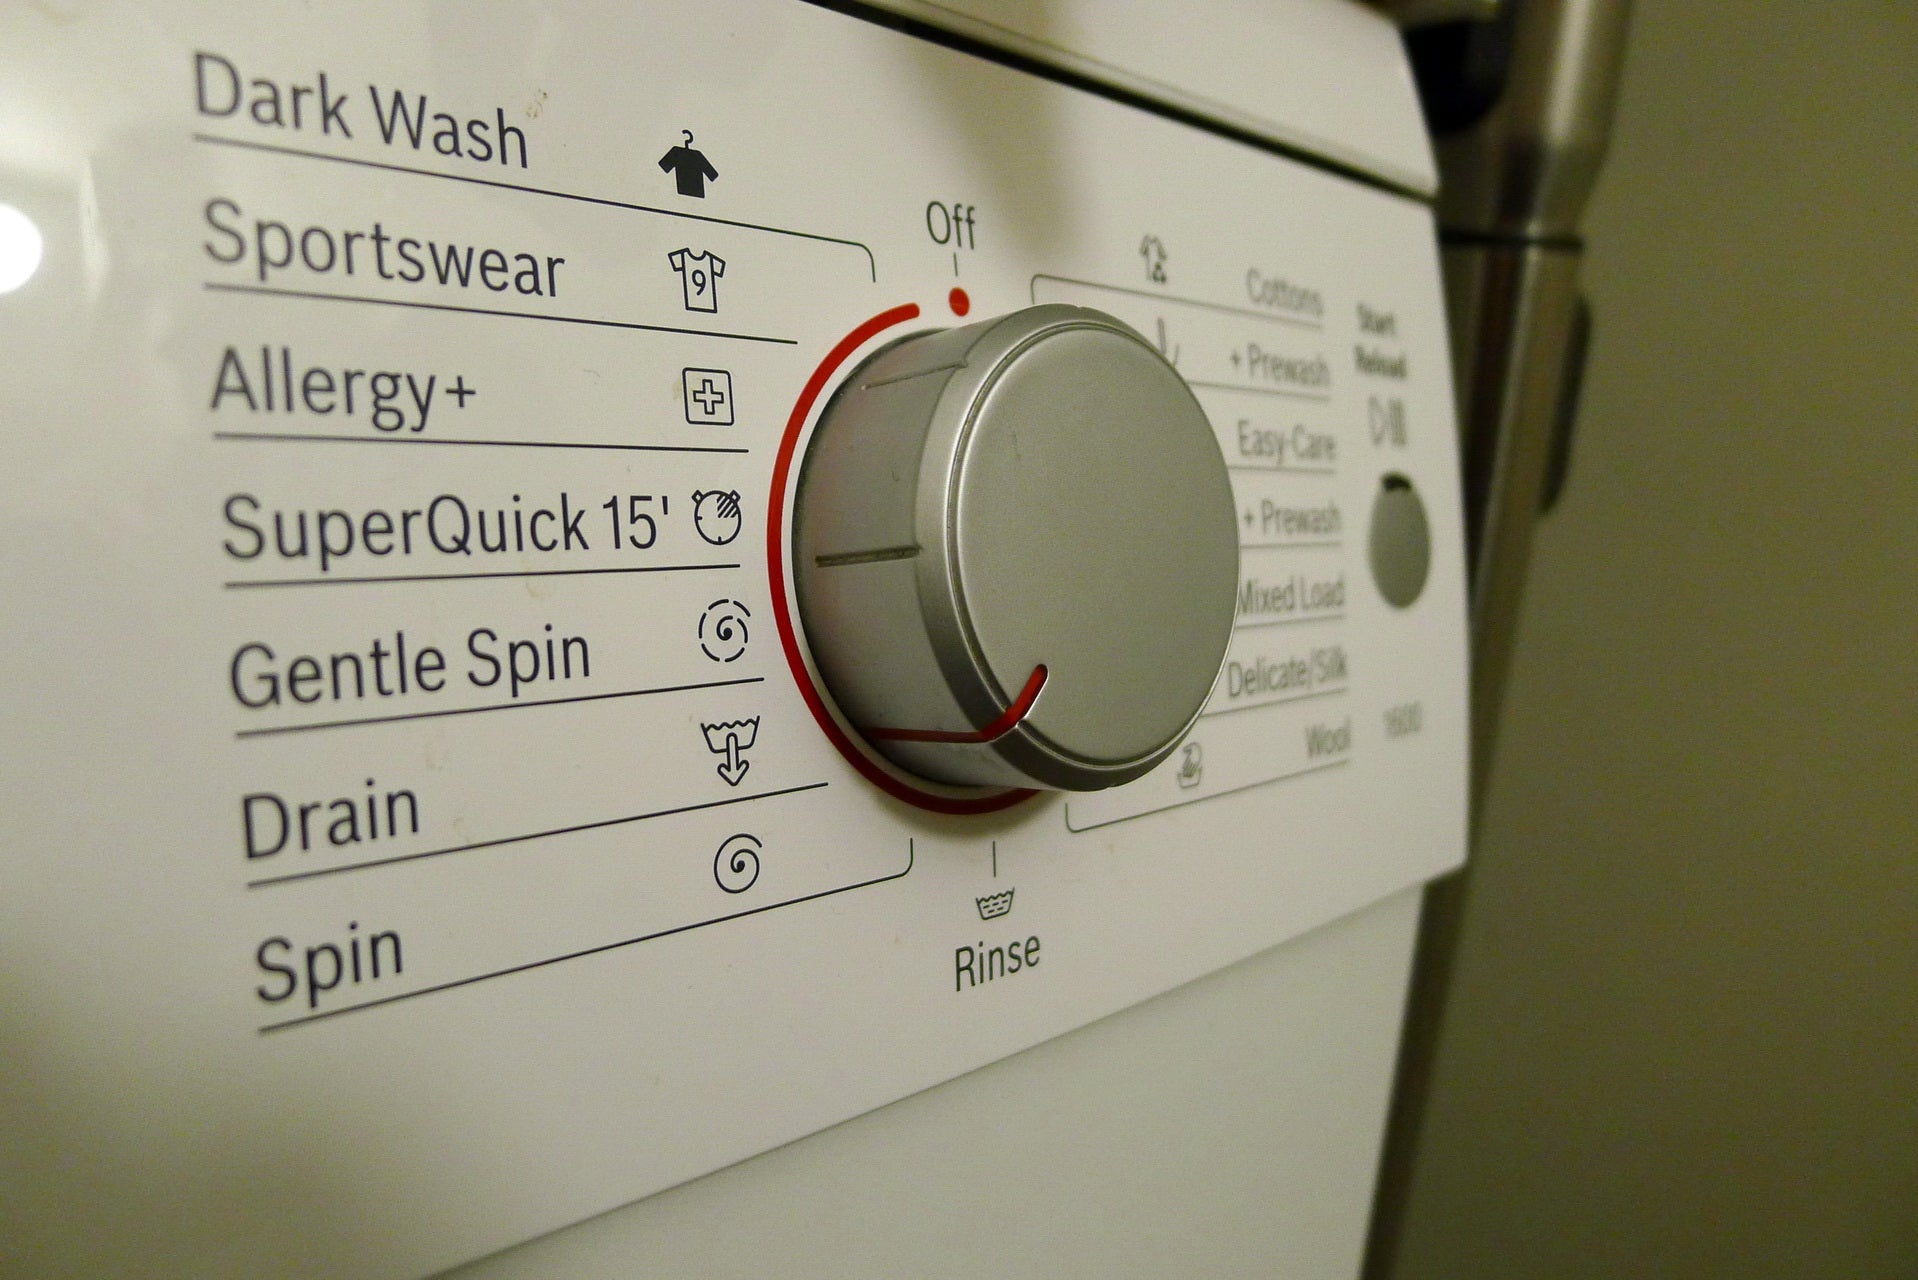 washing machine is running a drain program